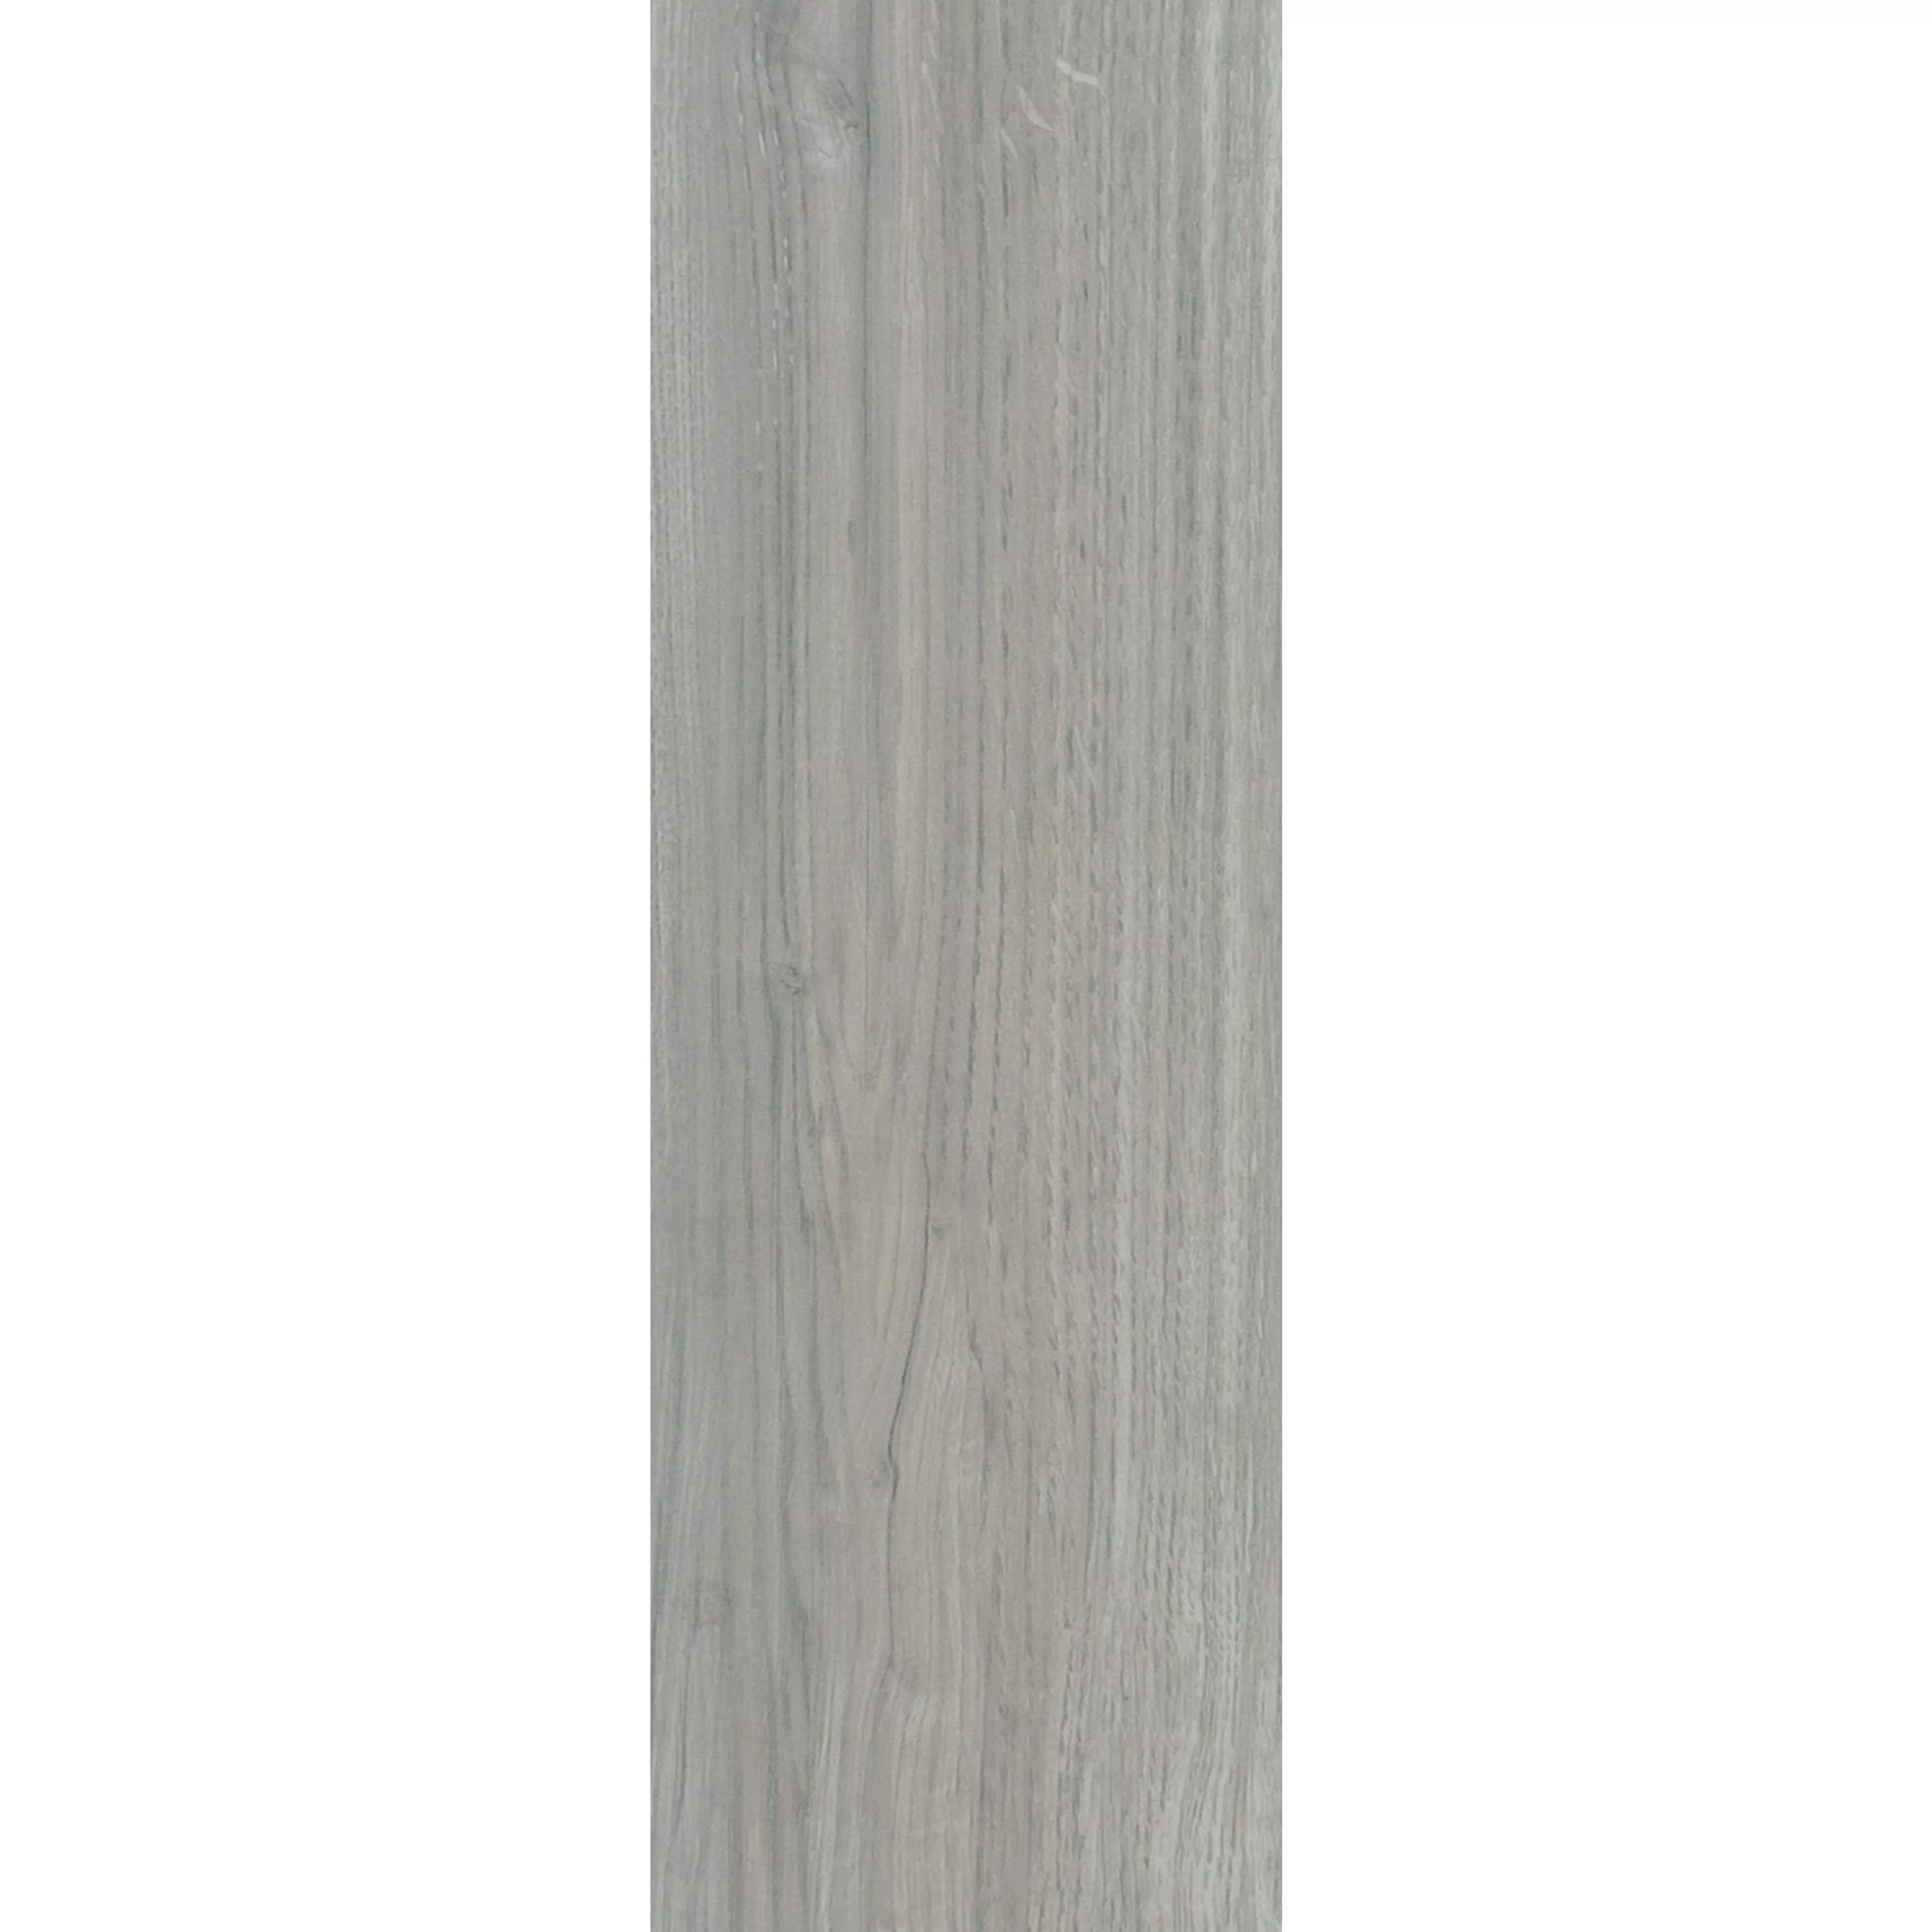 Sample Floor Tiles Wood Optic Fullwood Beige 20x120cm 